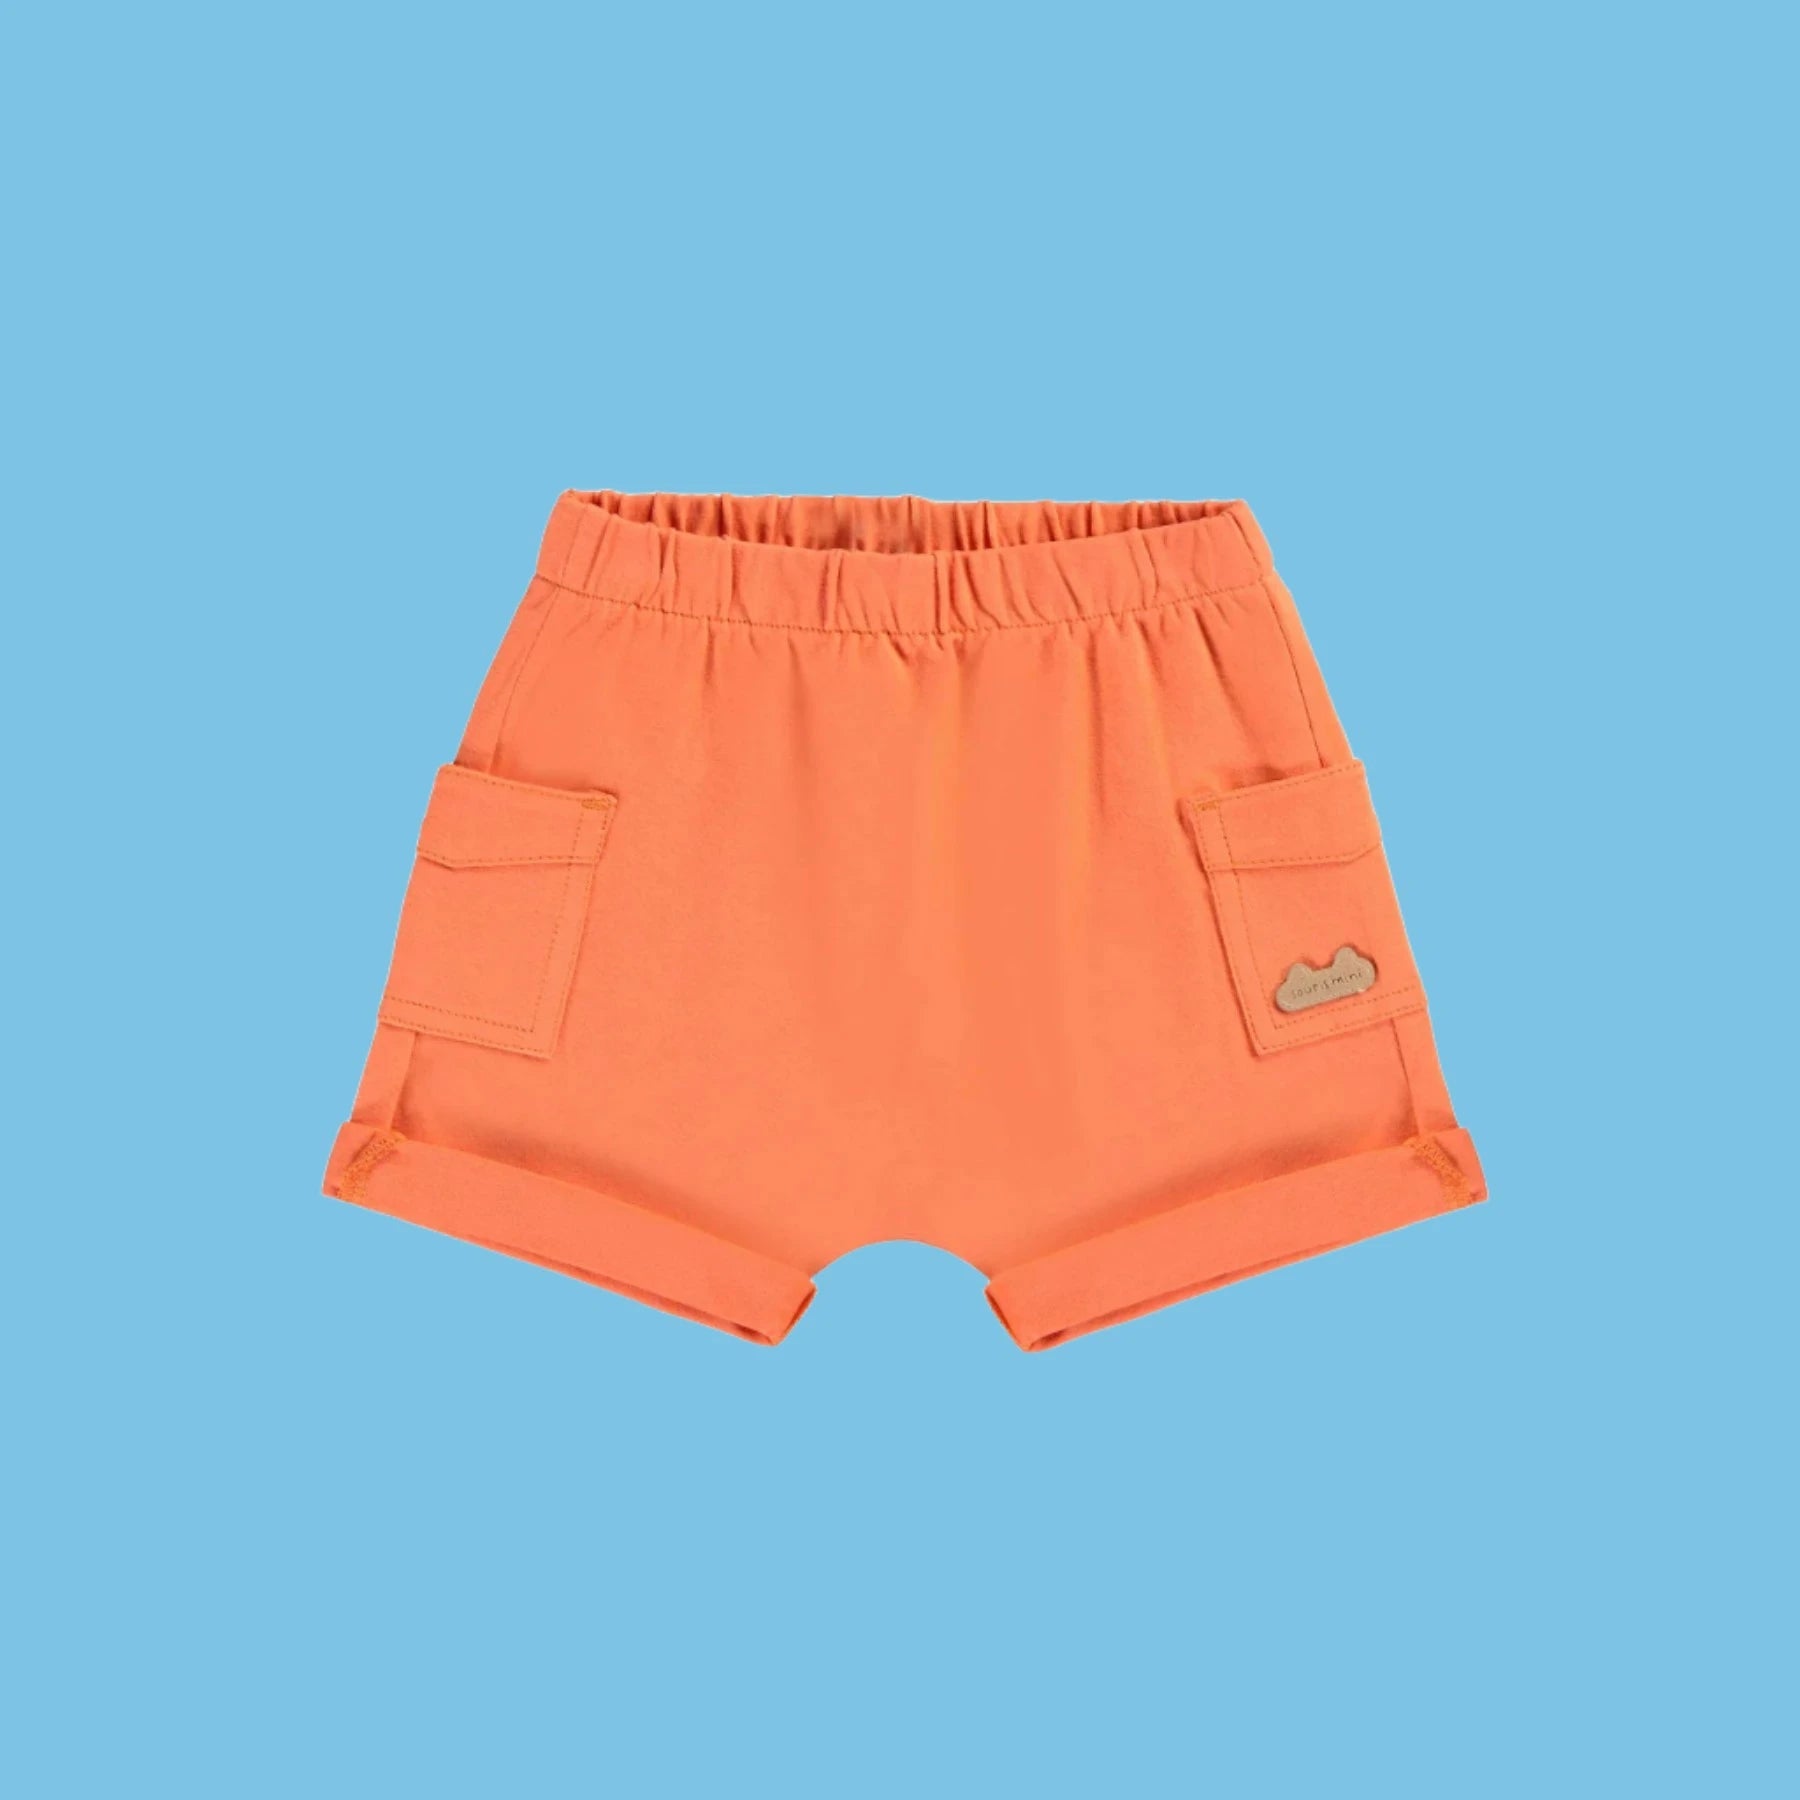 Orange short with pockets